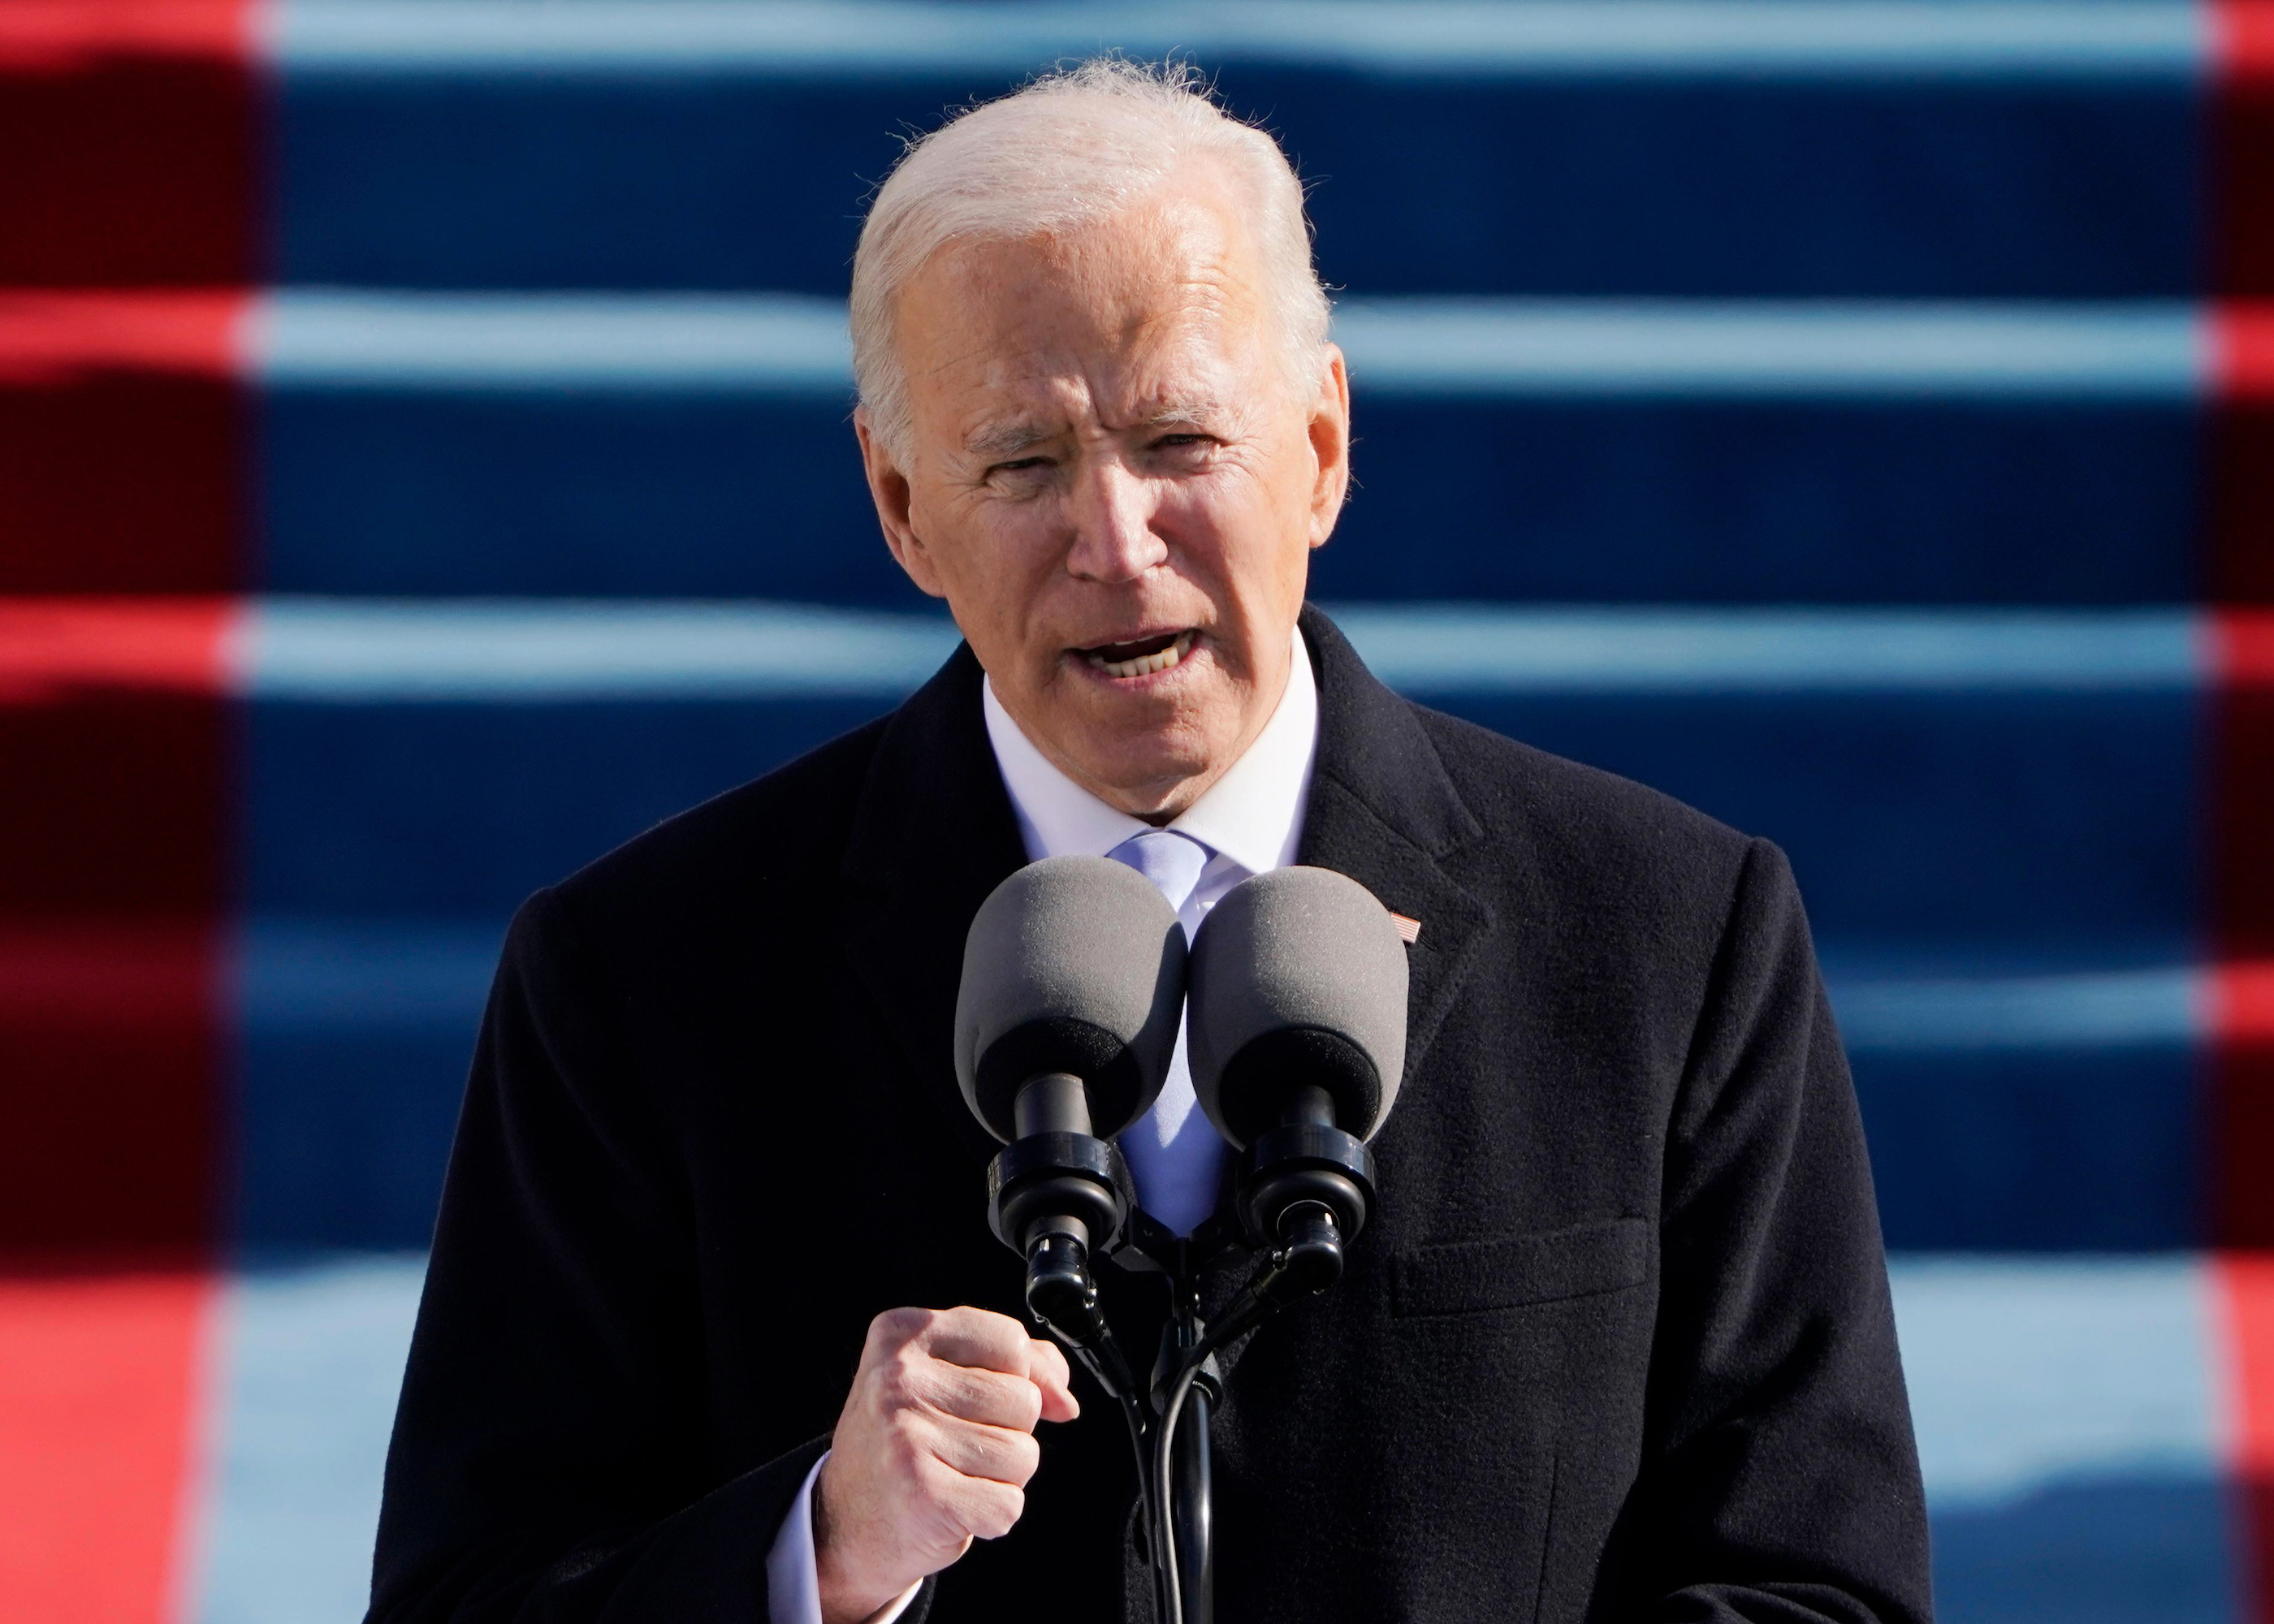 President Biden during his inauguration on Jan. 20.